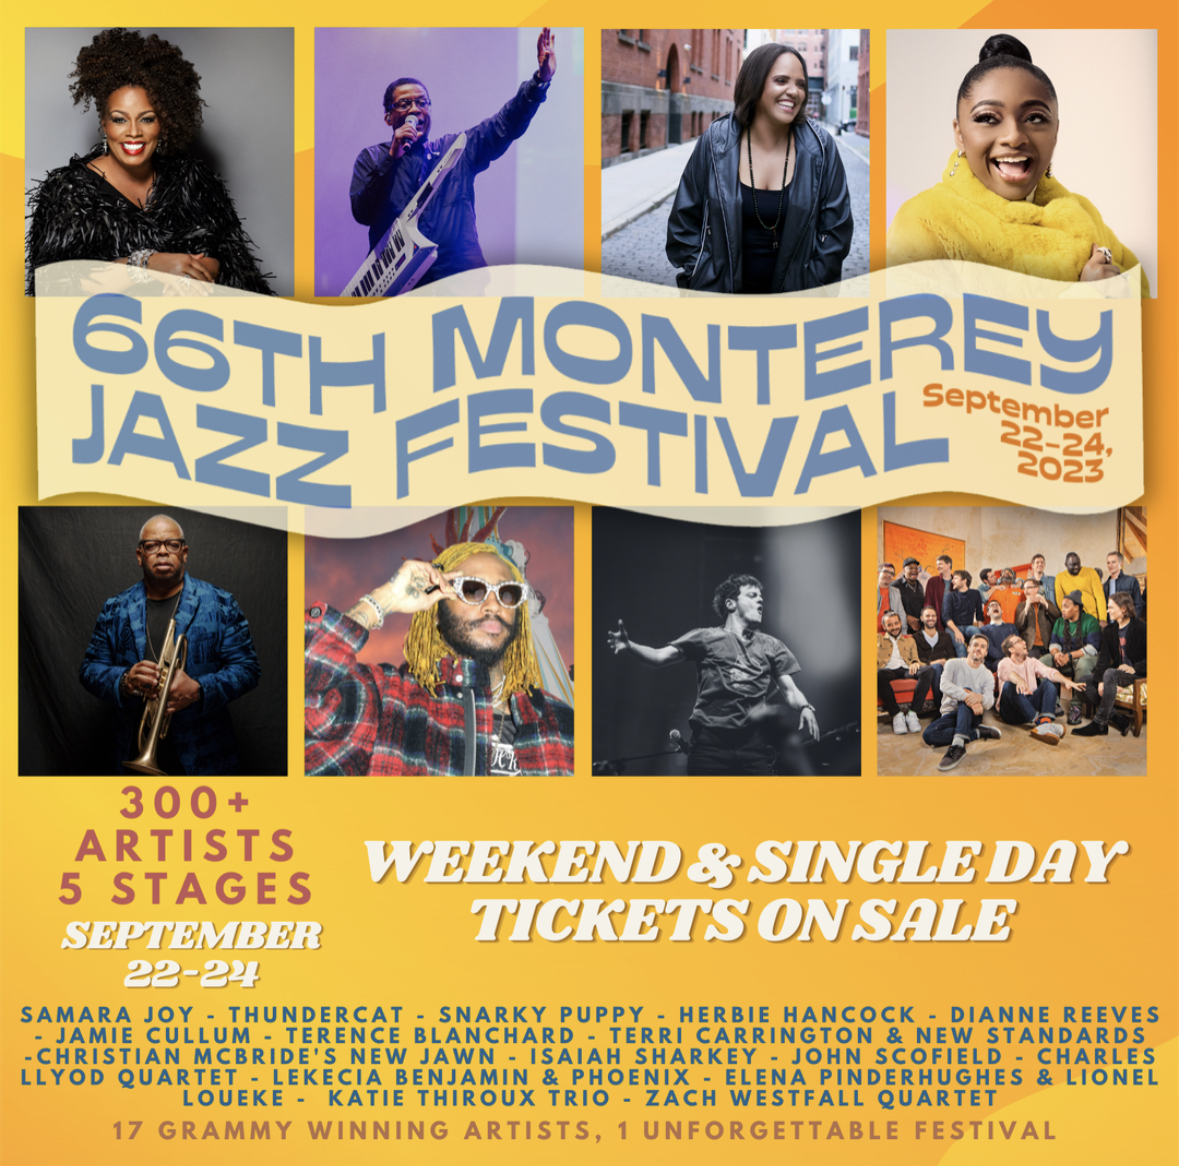 66th Monterey Jazz Festival September 2224 at Monterey County